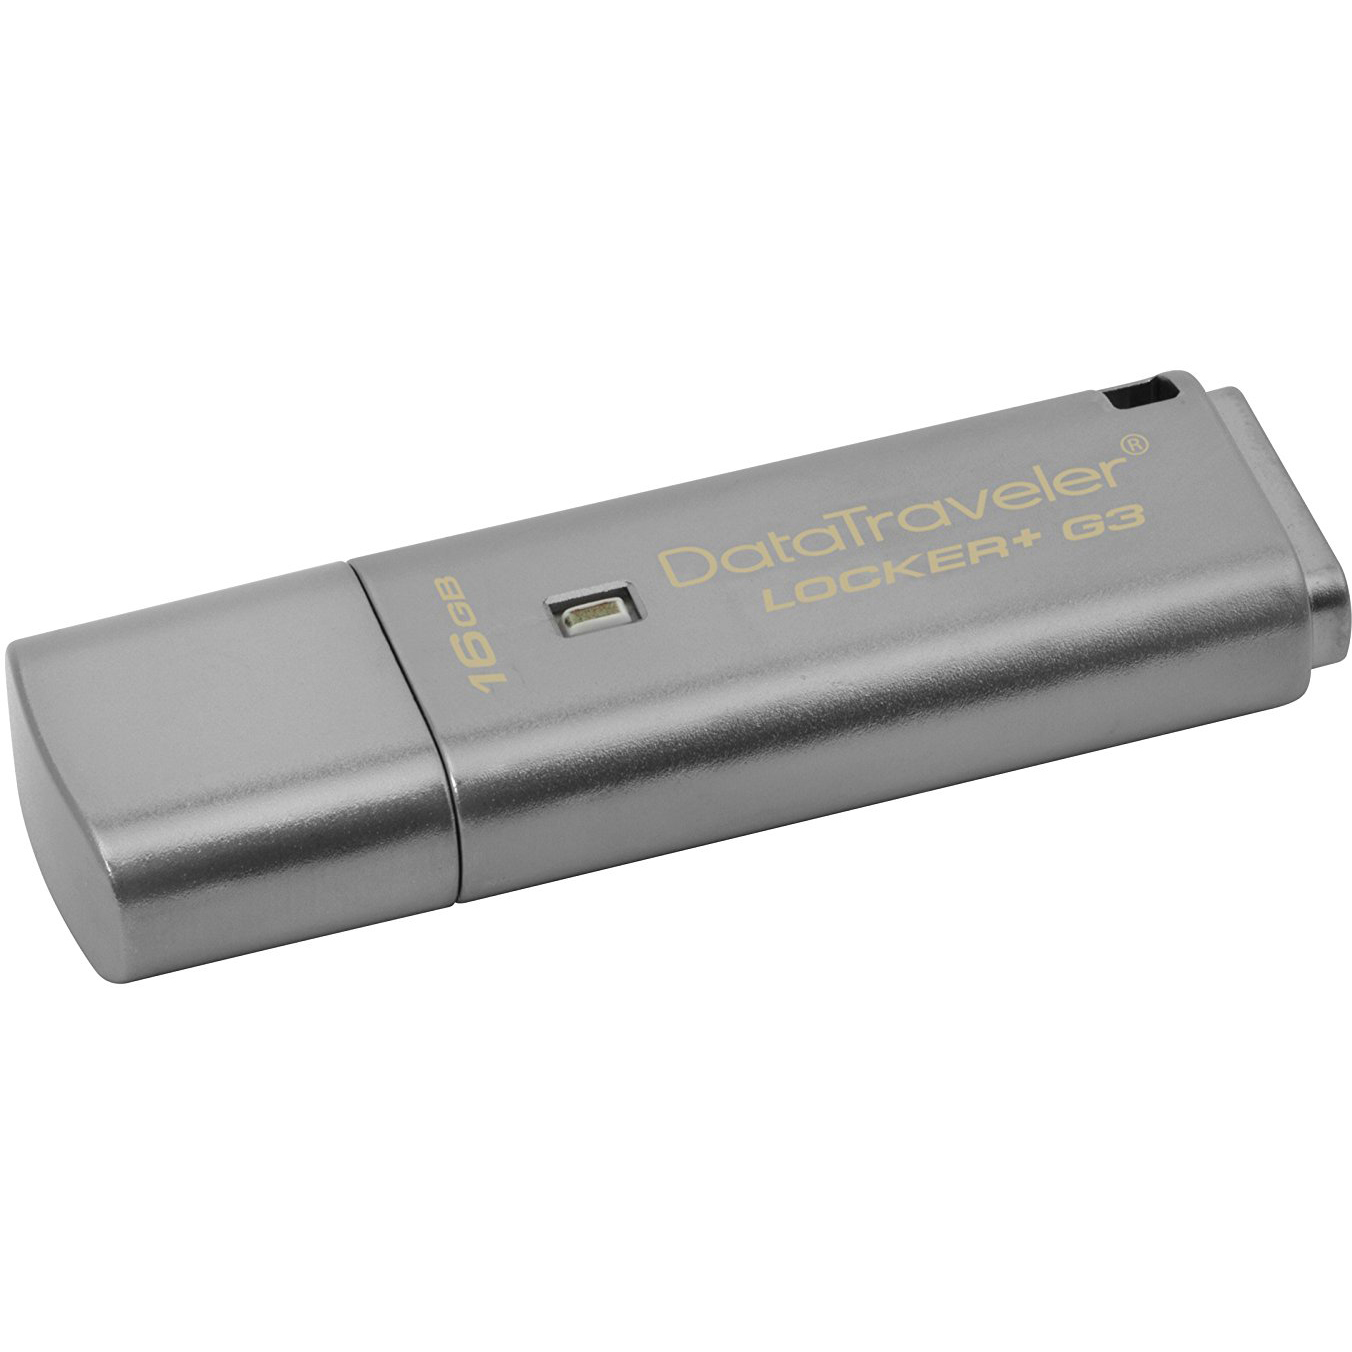 Original Kingston Data Traveler Locker+ G3 16GB Silver USB 3.0 Flash Drive (DTLPG3/16GB)